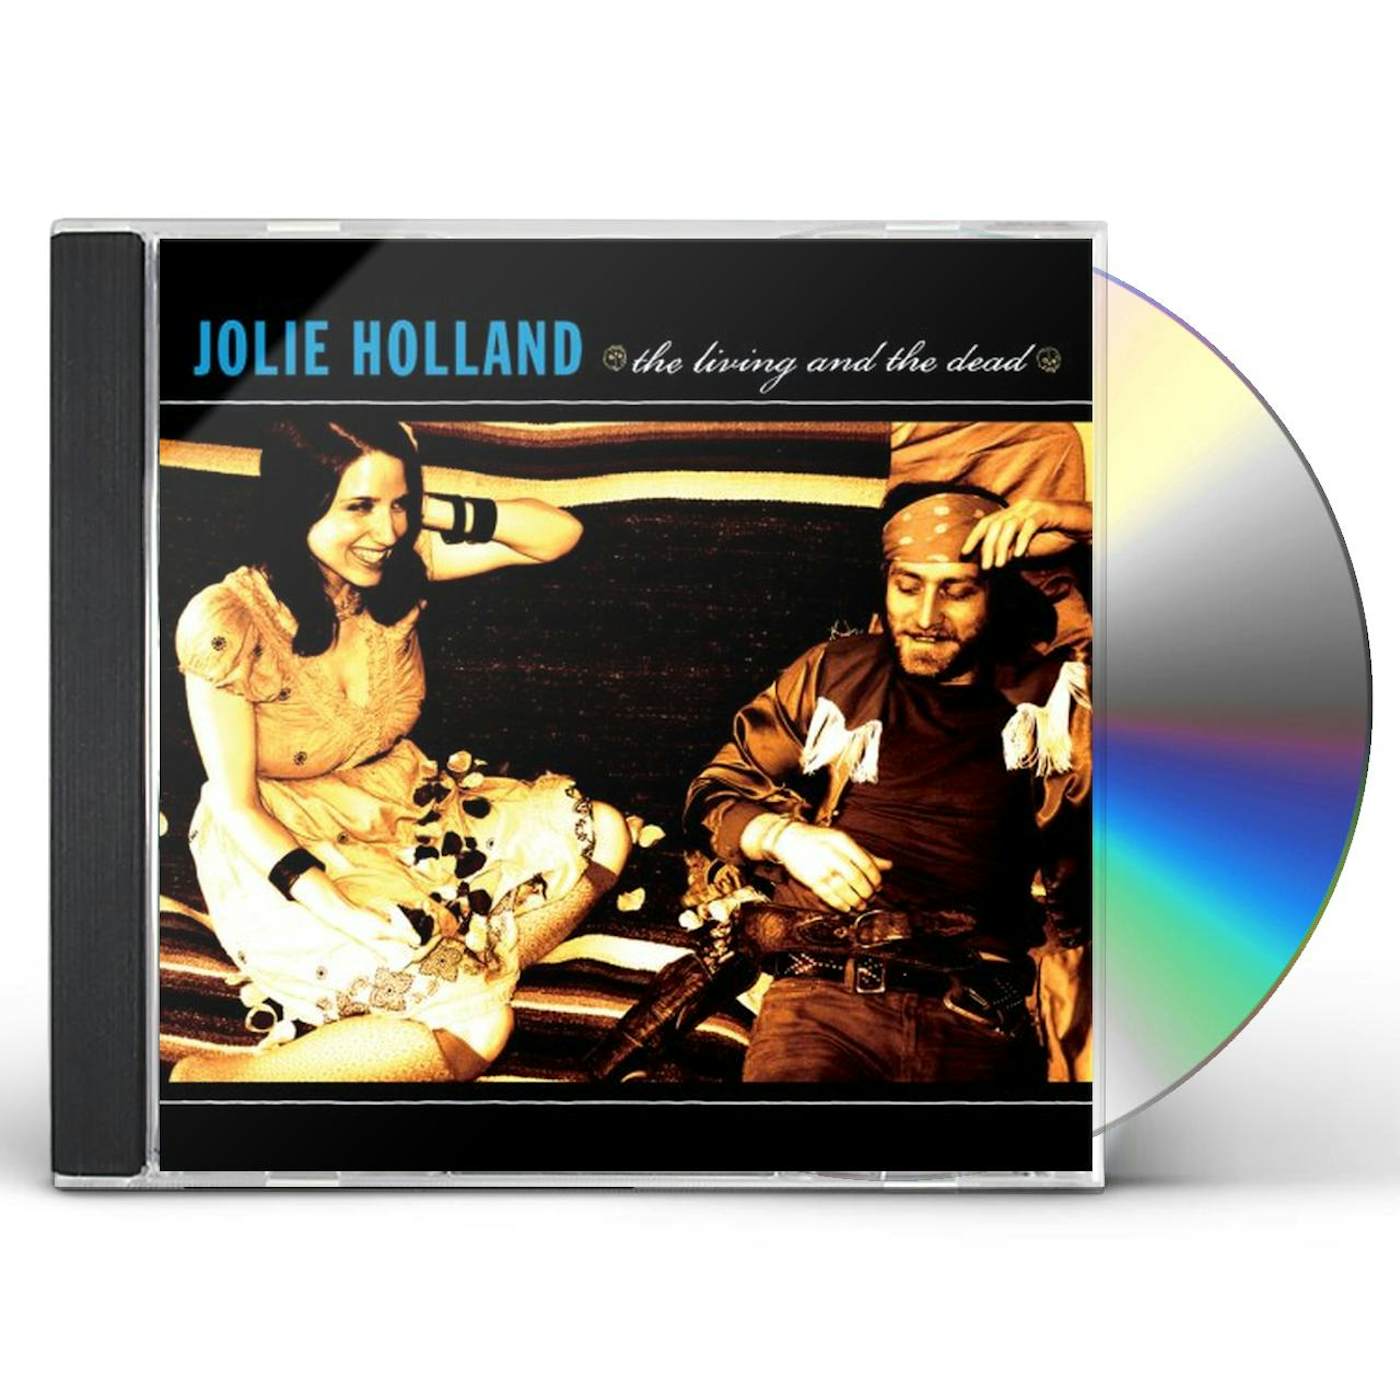 Jolie Holland LIVING & THE DEAD CD